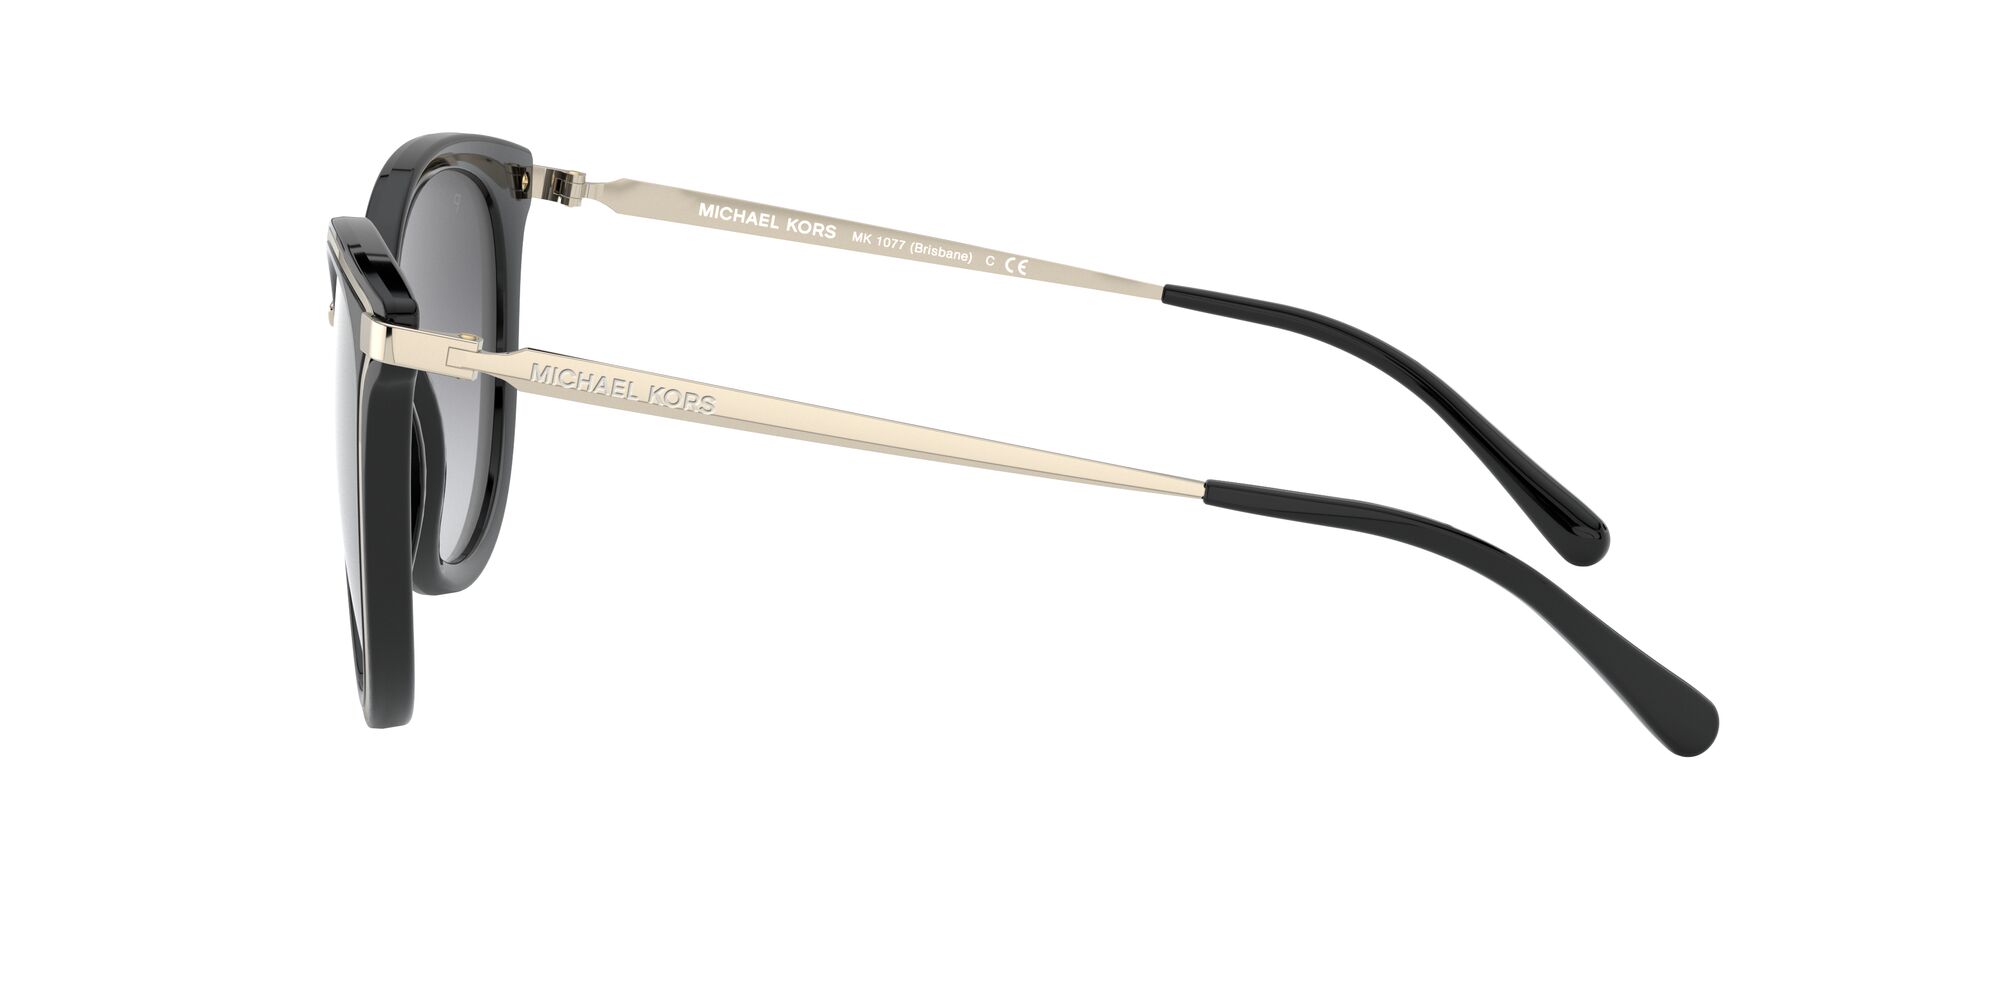 Michael Kors Light GoldBlack Sunglasses  Glassescom  Free Shipping